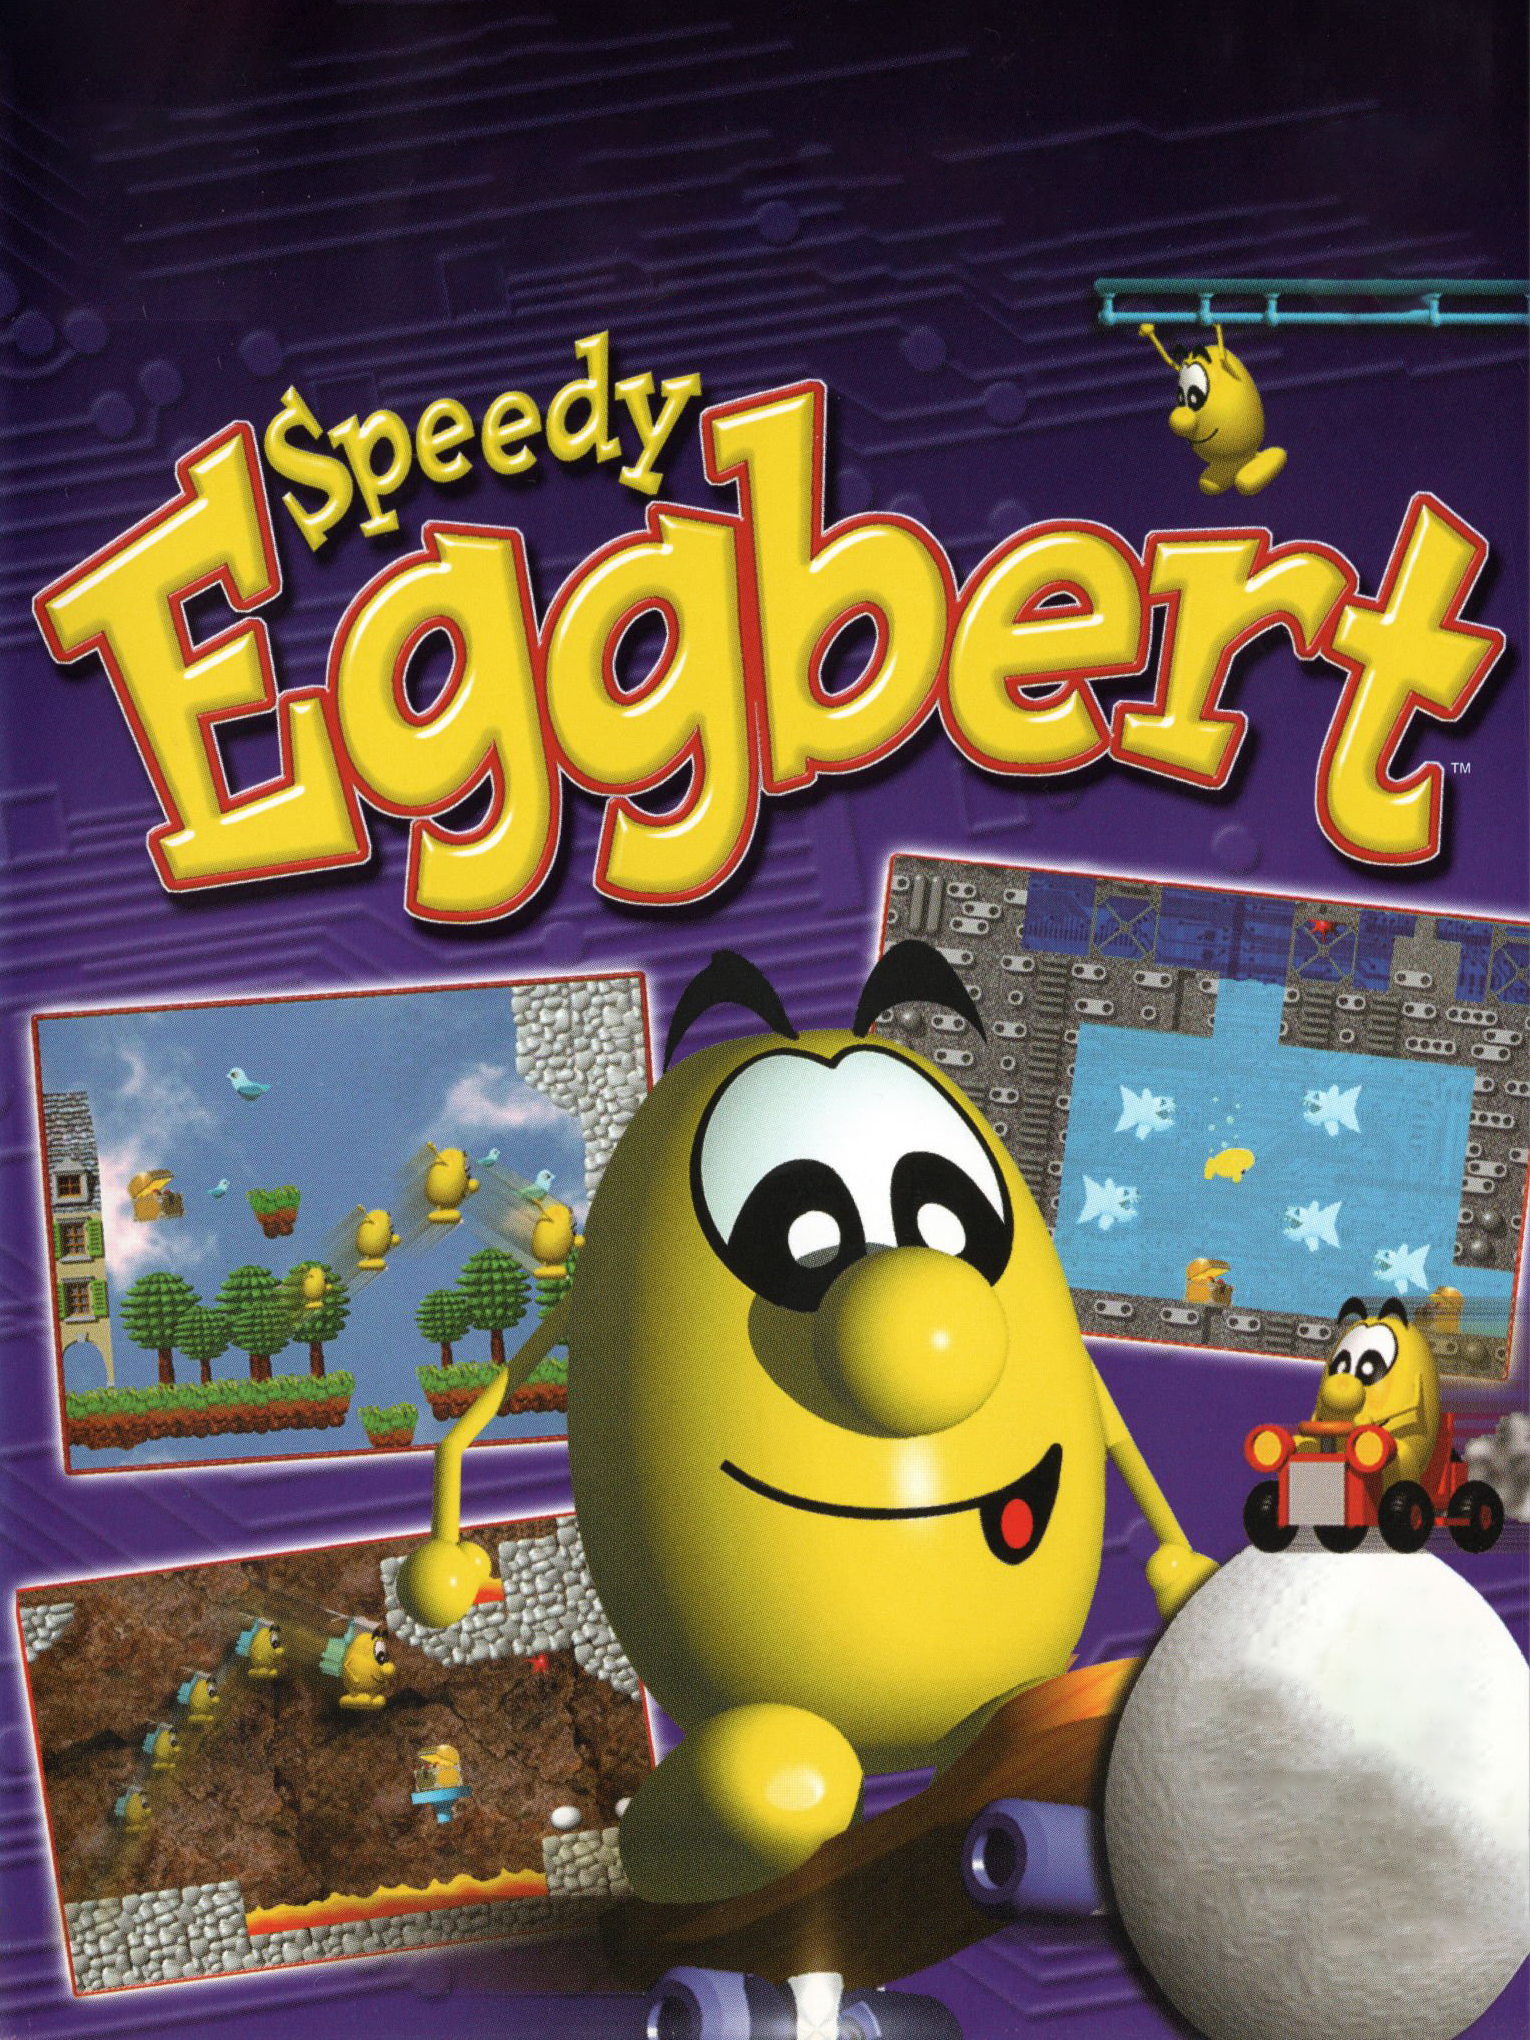 Stream Speedy Eggbert Identification Series#4474860682757 please